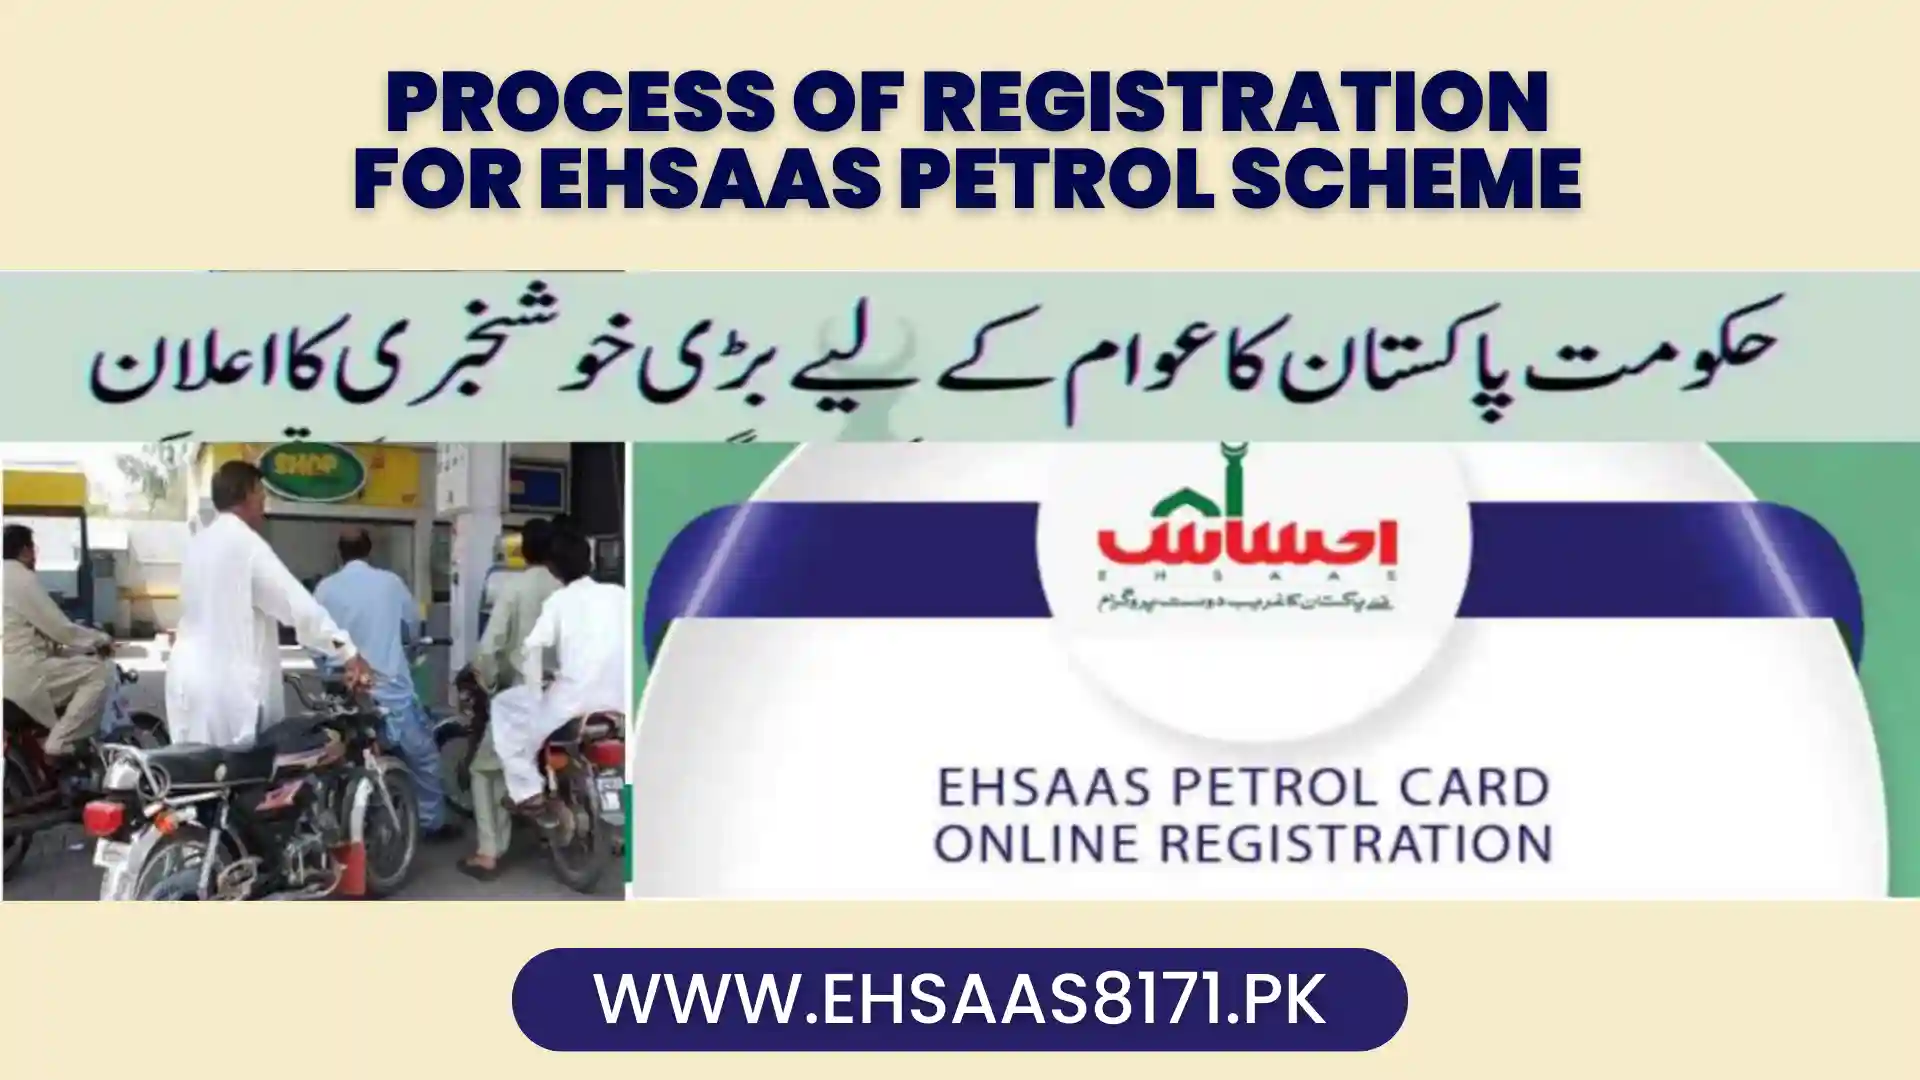 Process of Registration for Ehsaas Petrol Scheme